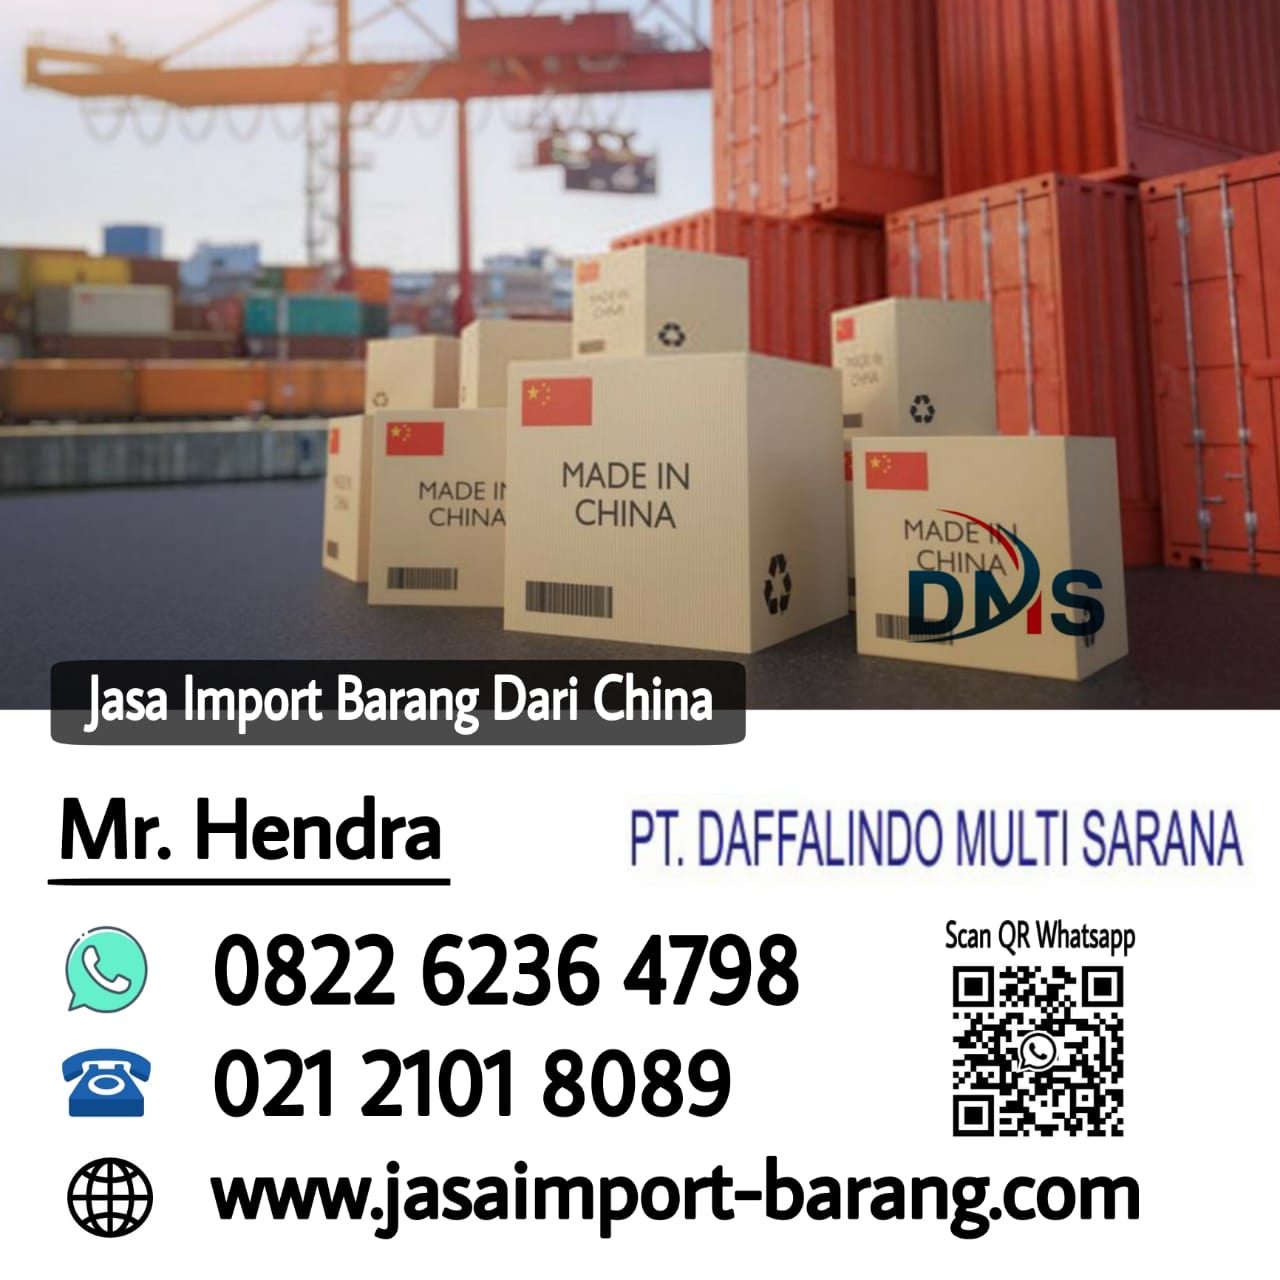 jasa_import_barang_dari_china.jpg